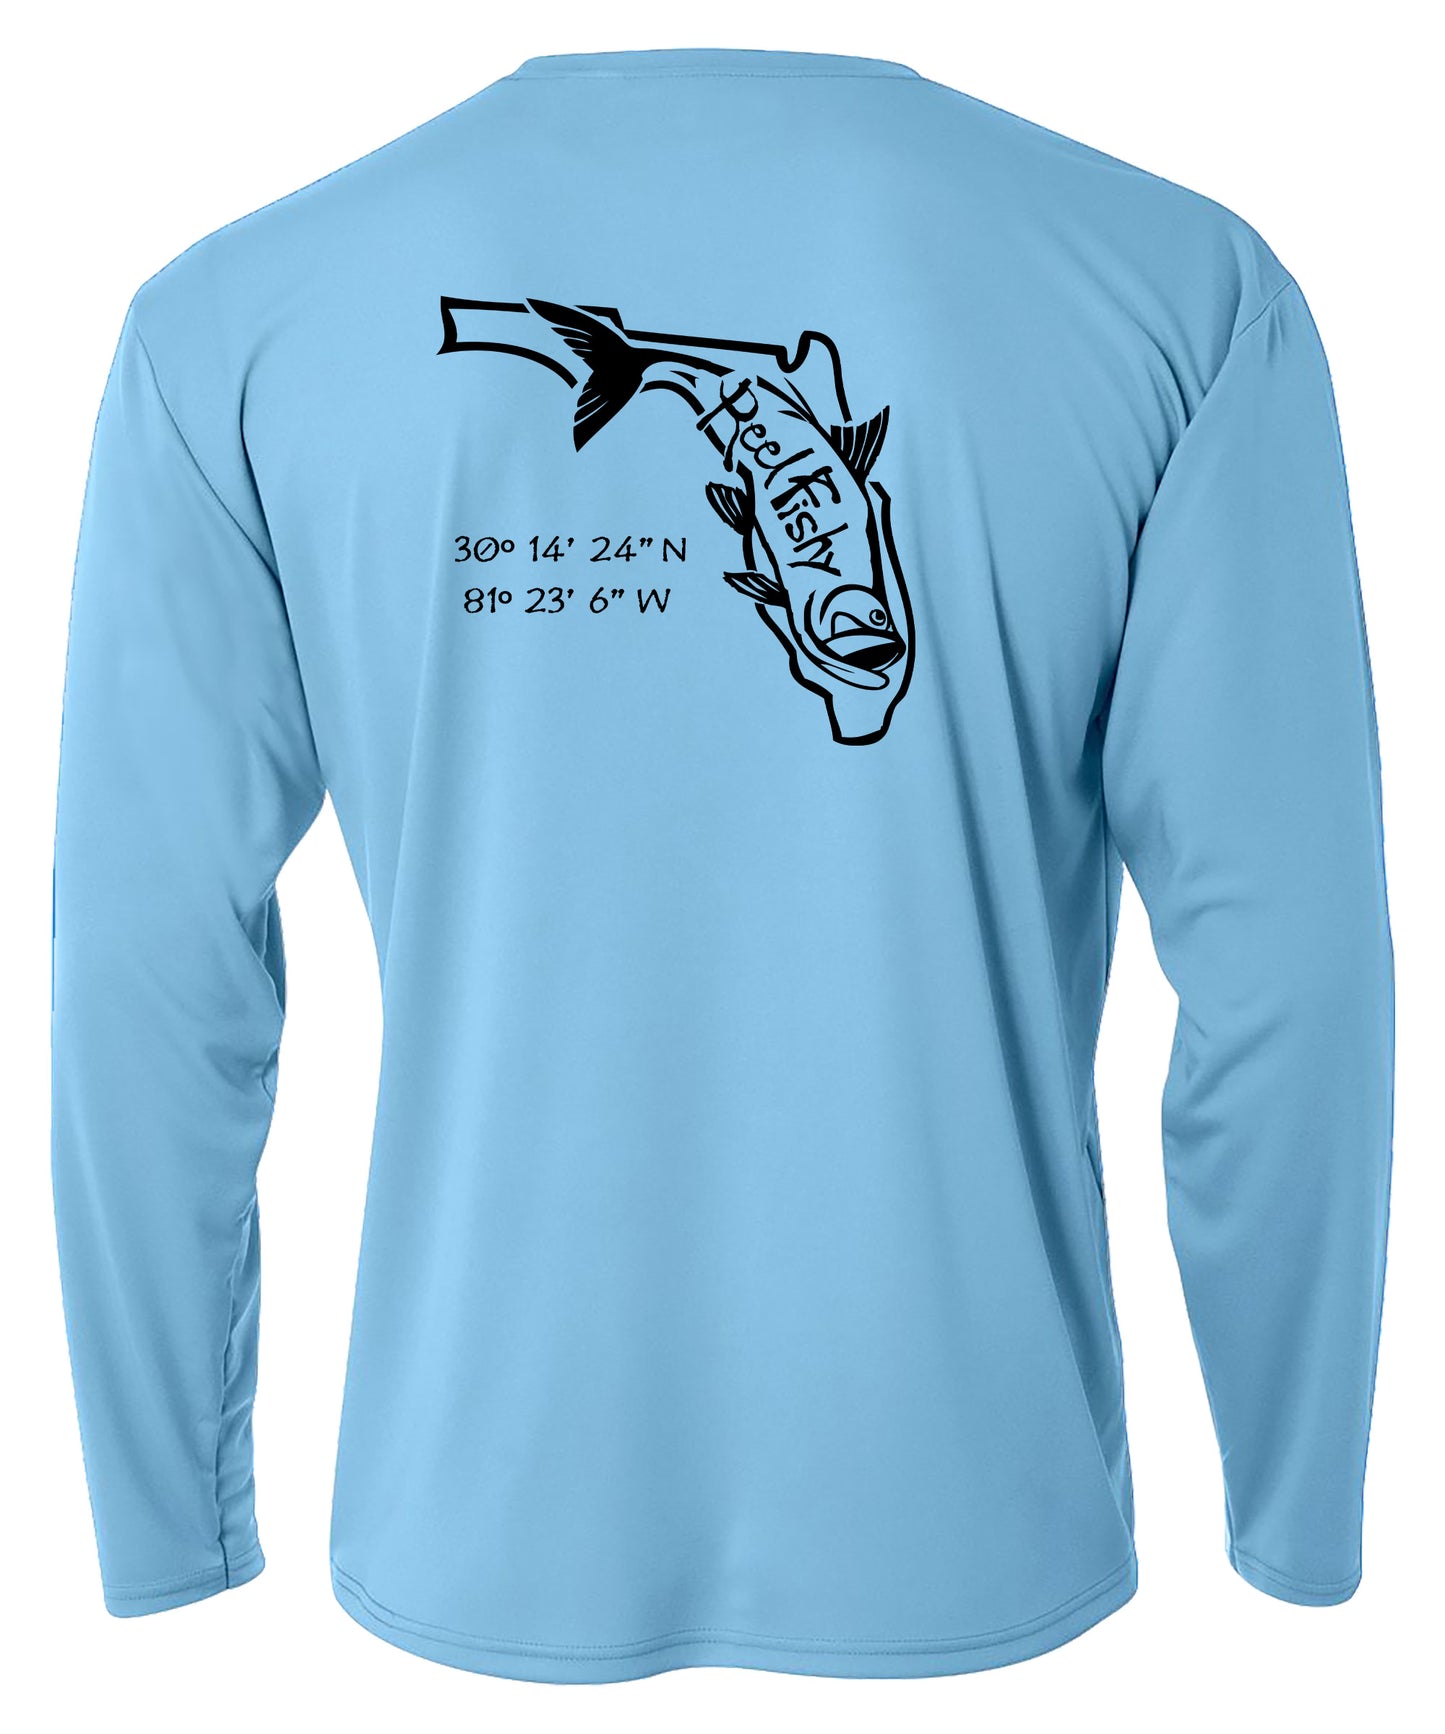 Lt. Blue/Navy Tarpon State of FL Performance Shirts 50+UV Sun Protection Long Sleeves